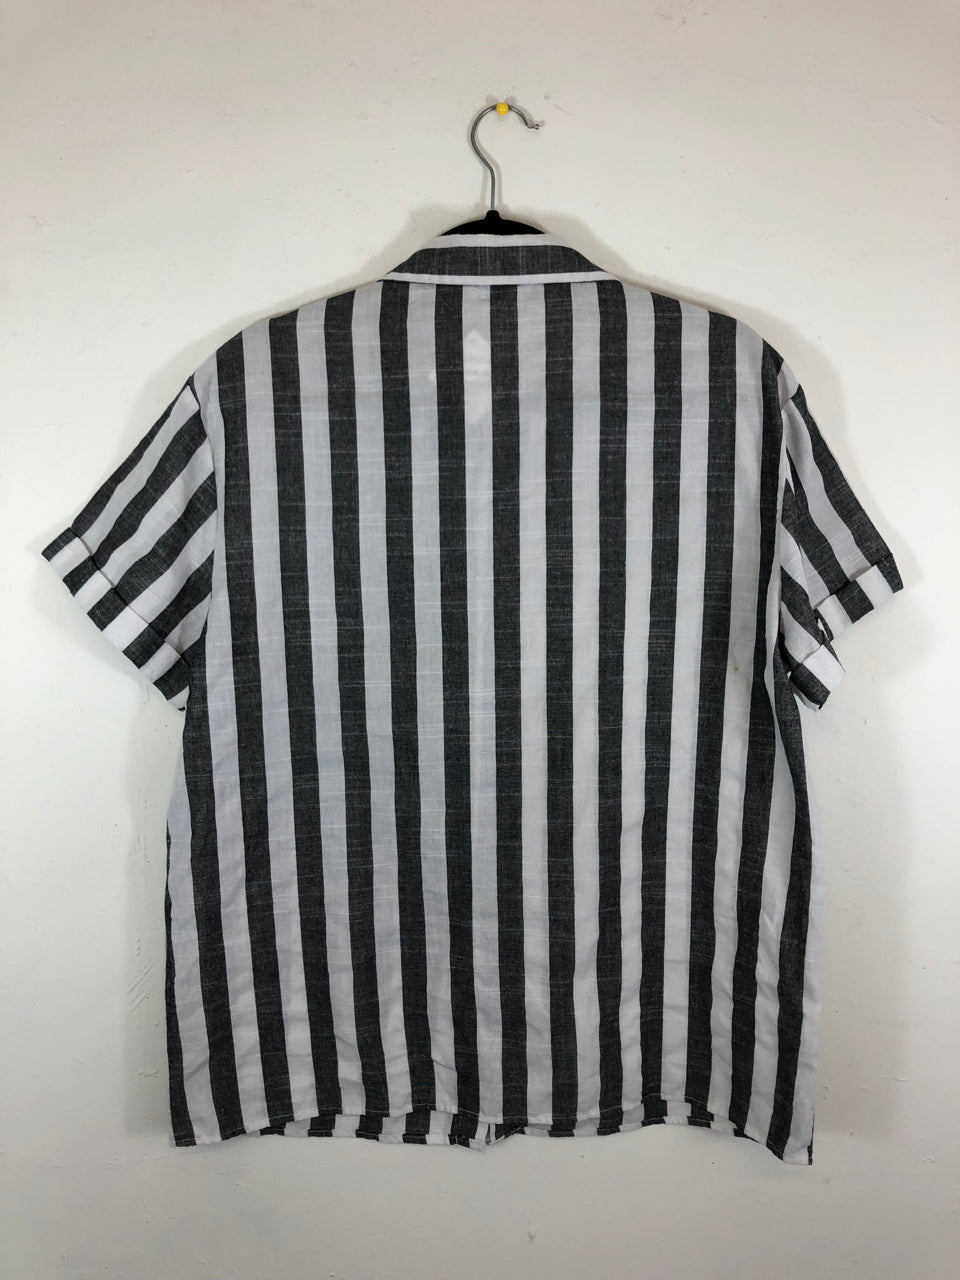 Incerun Striped Shirt